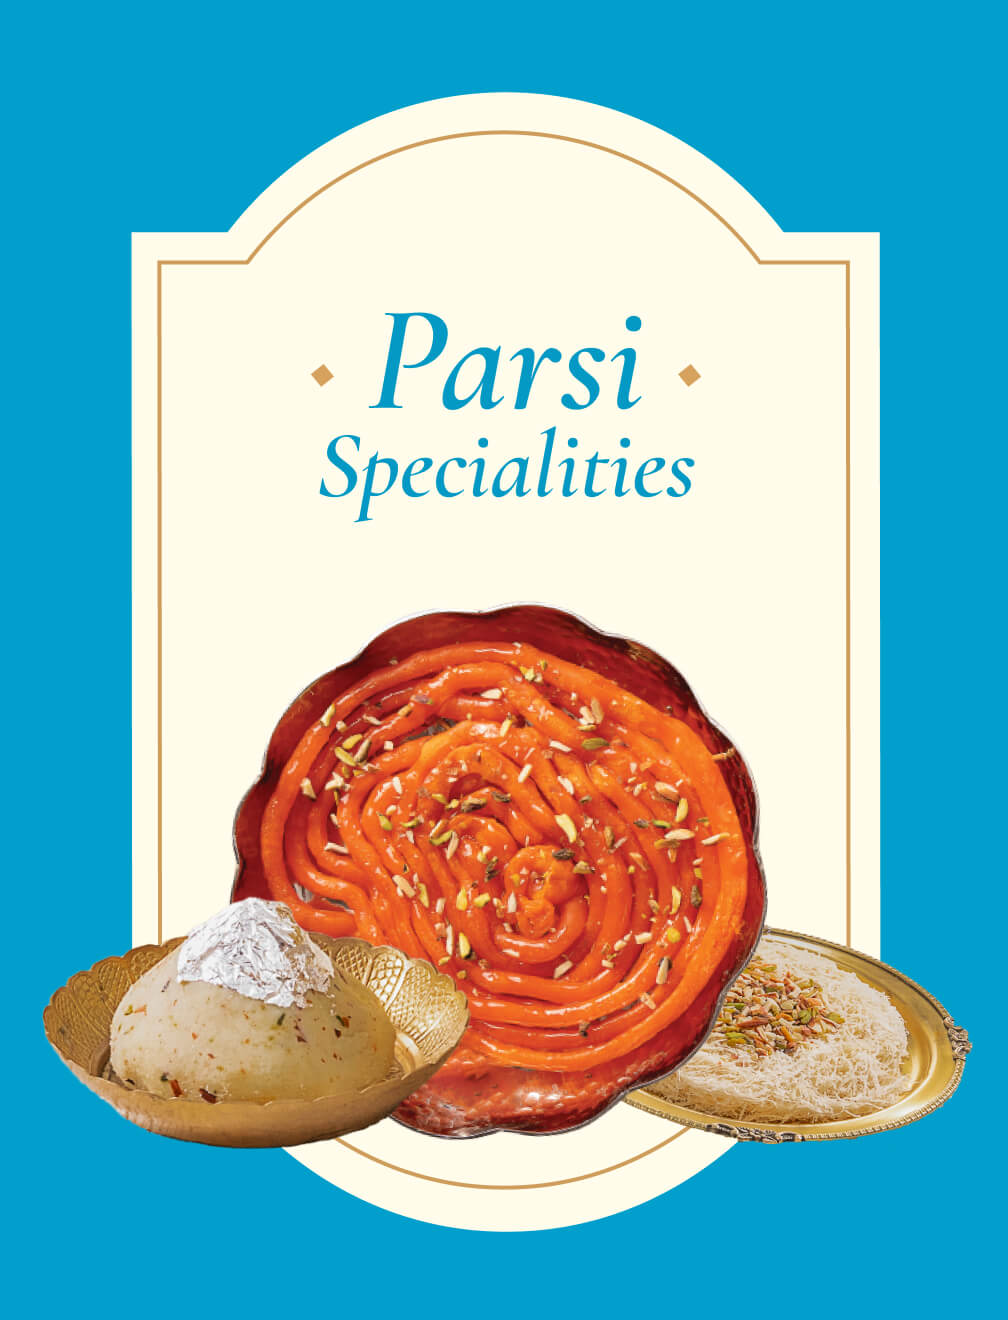 Parsi Specialities